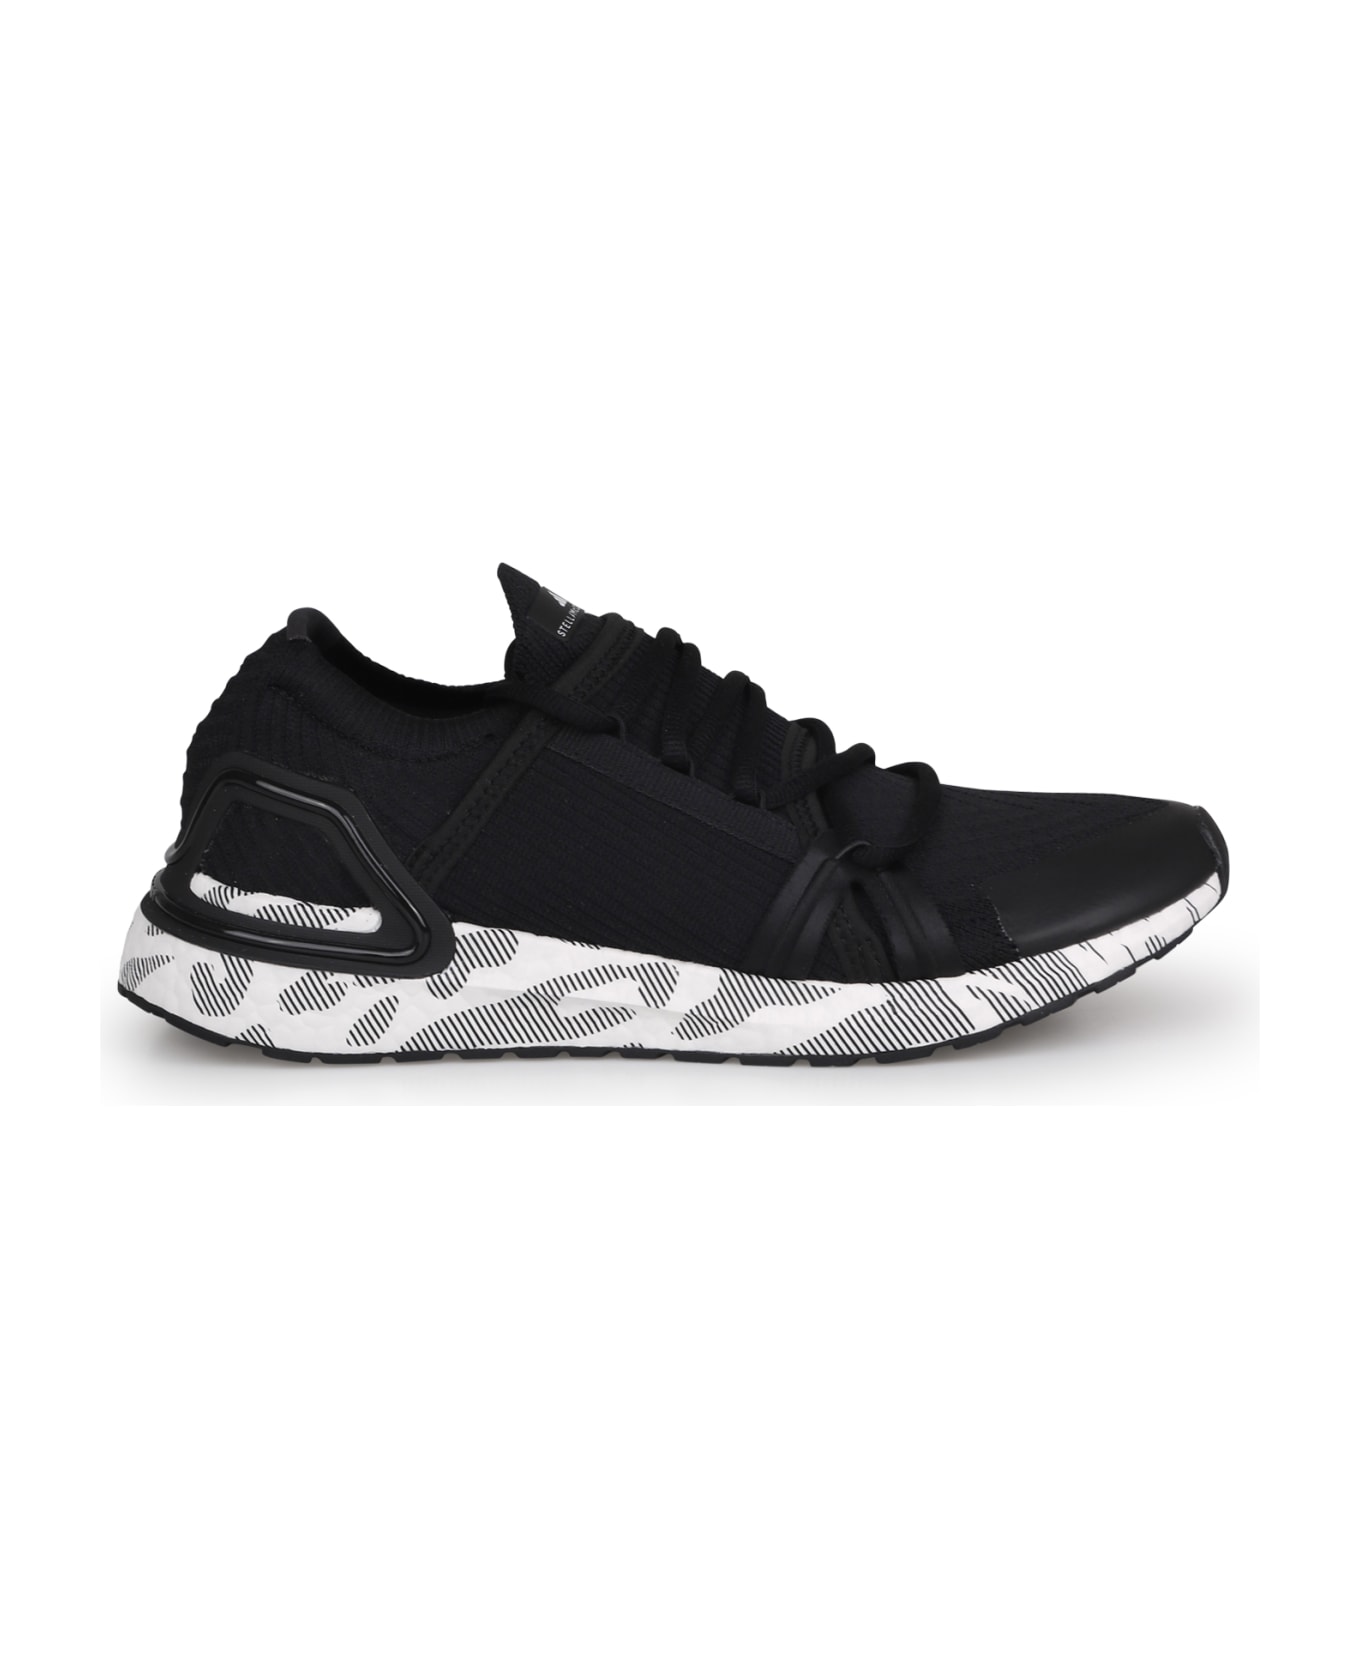 Adidas by Stella McCartney Ultraboost 20 Low-top Sneakers - Black スニーカー